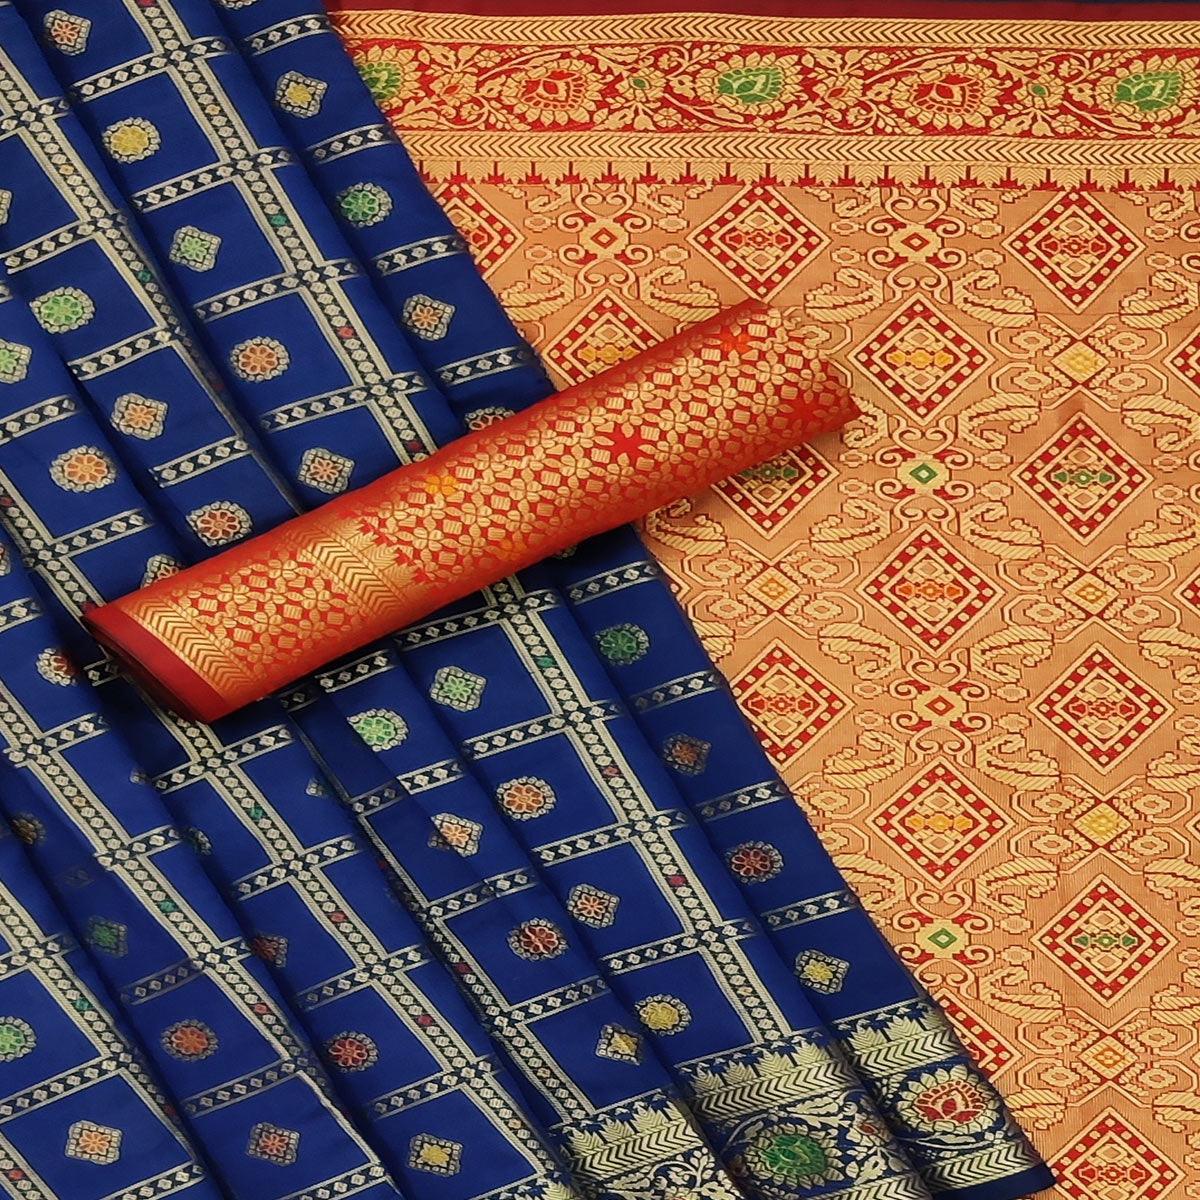 Royal Blue Festive Wear Weaving Silk Saree - Peachmode